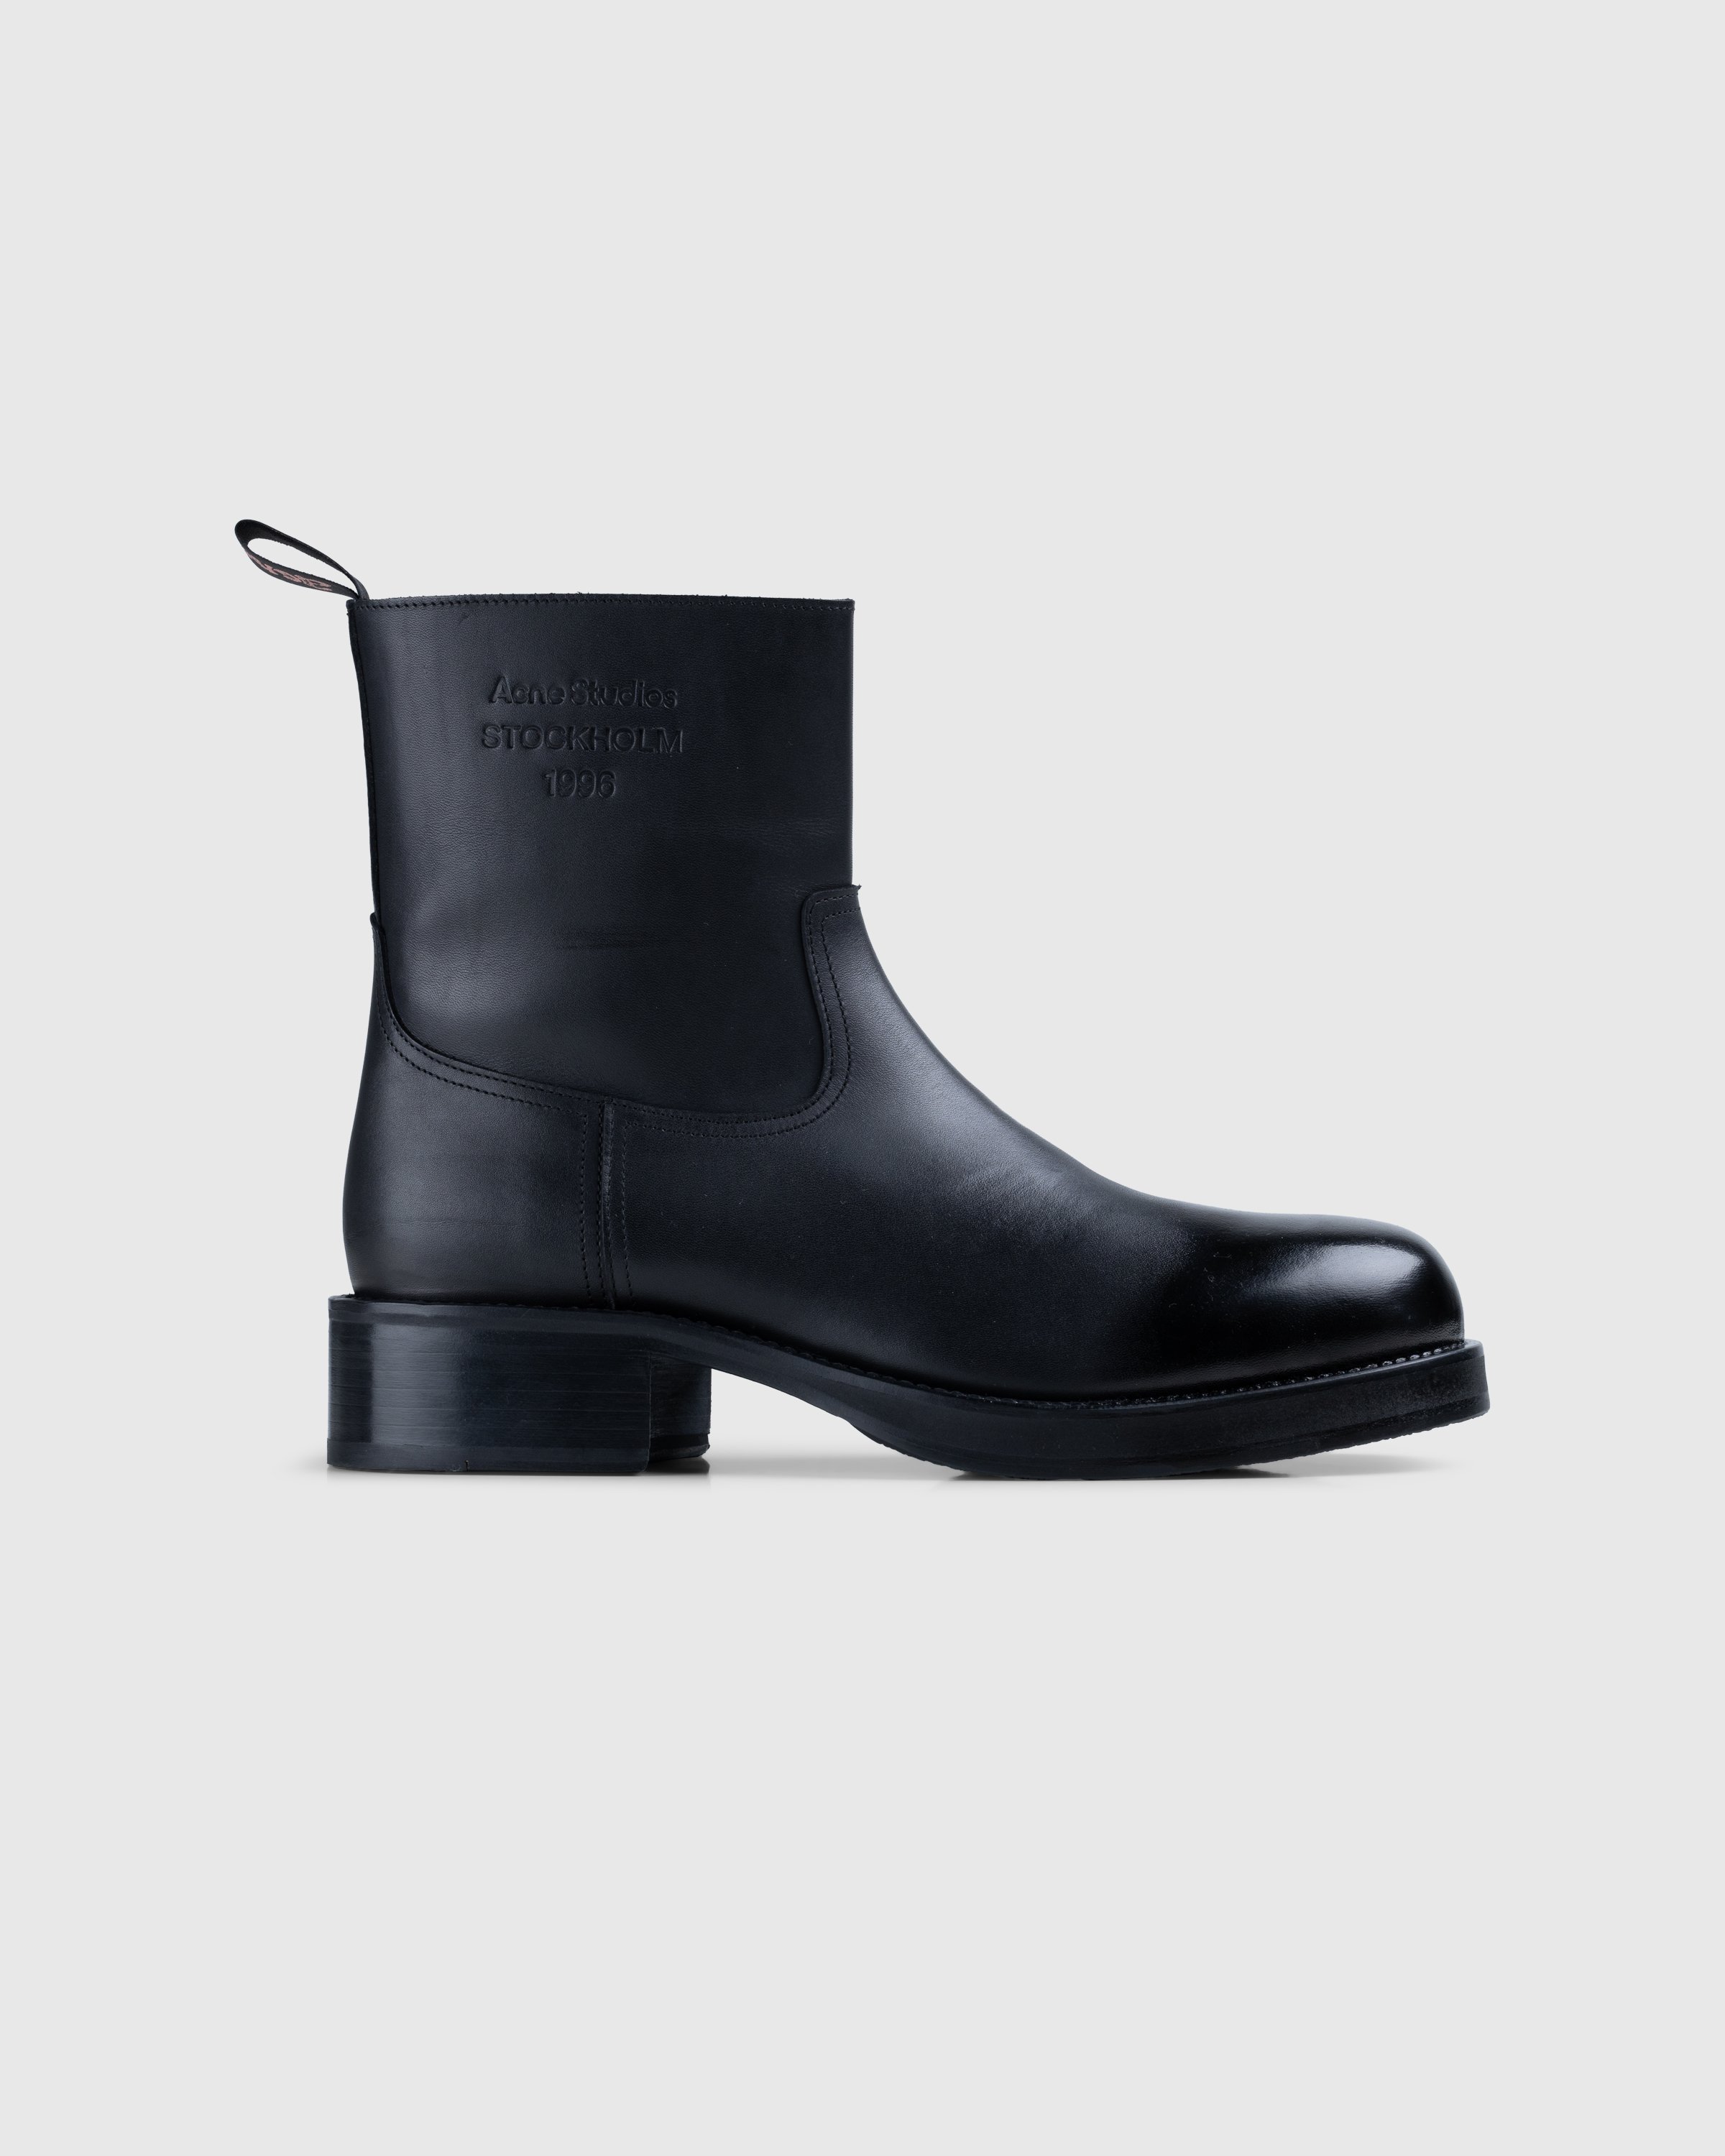 Acne Studios - Sprayed Leather Ankle Boots Black - Footwear - Black - Image 1